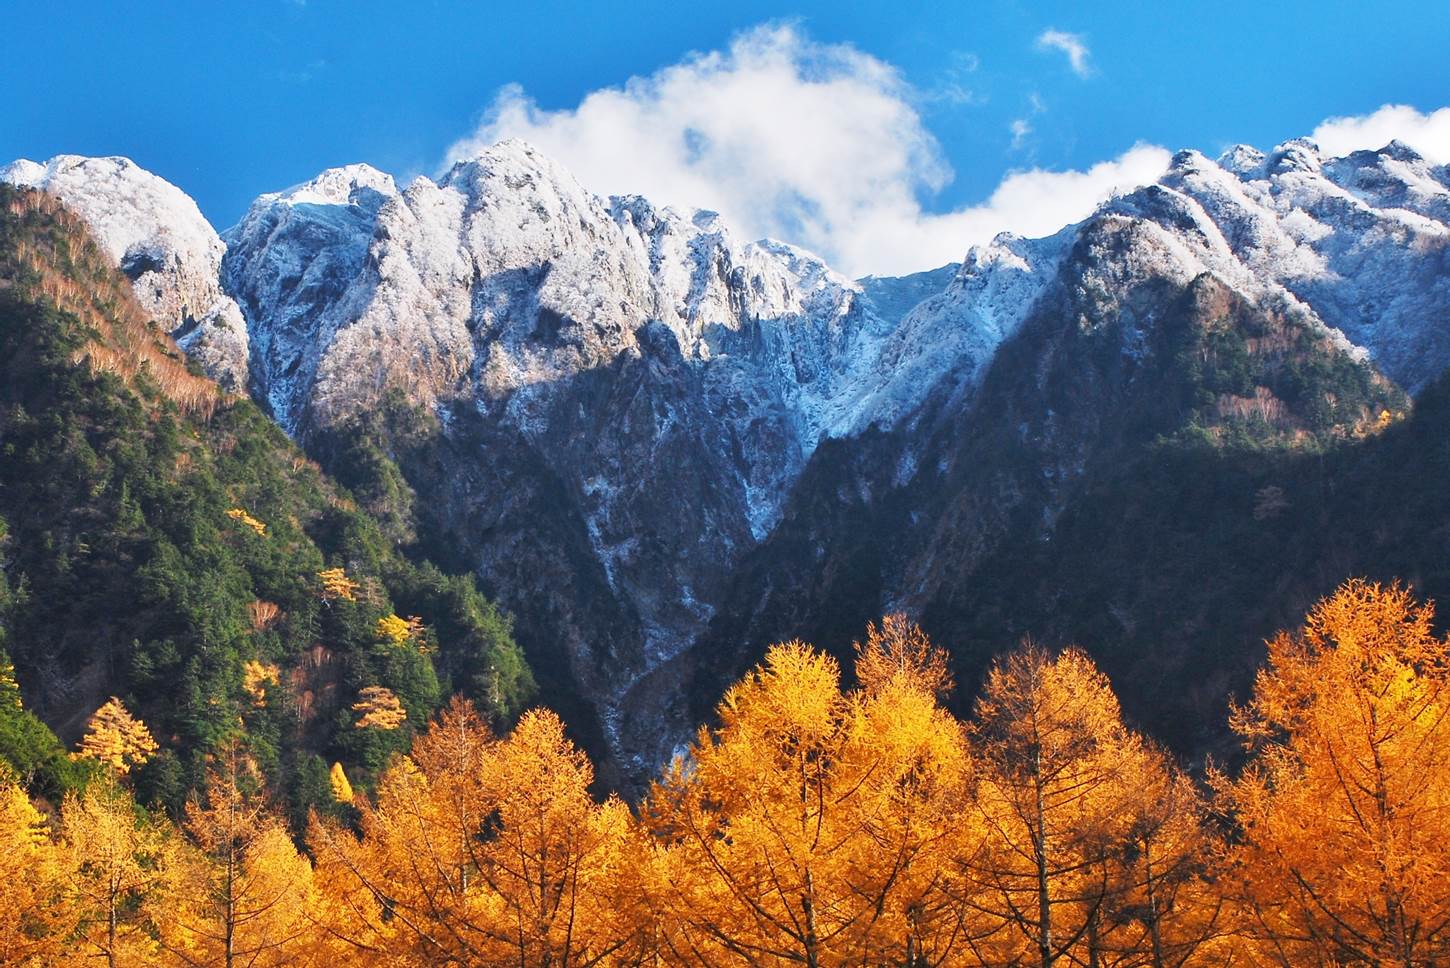 Video: Mountainous Region of the Japanese Alps